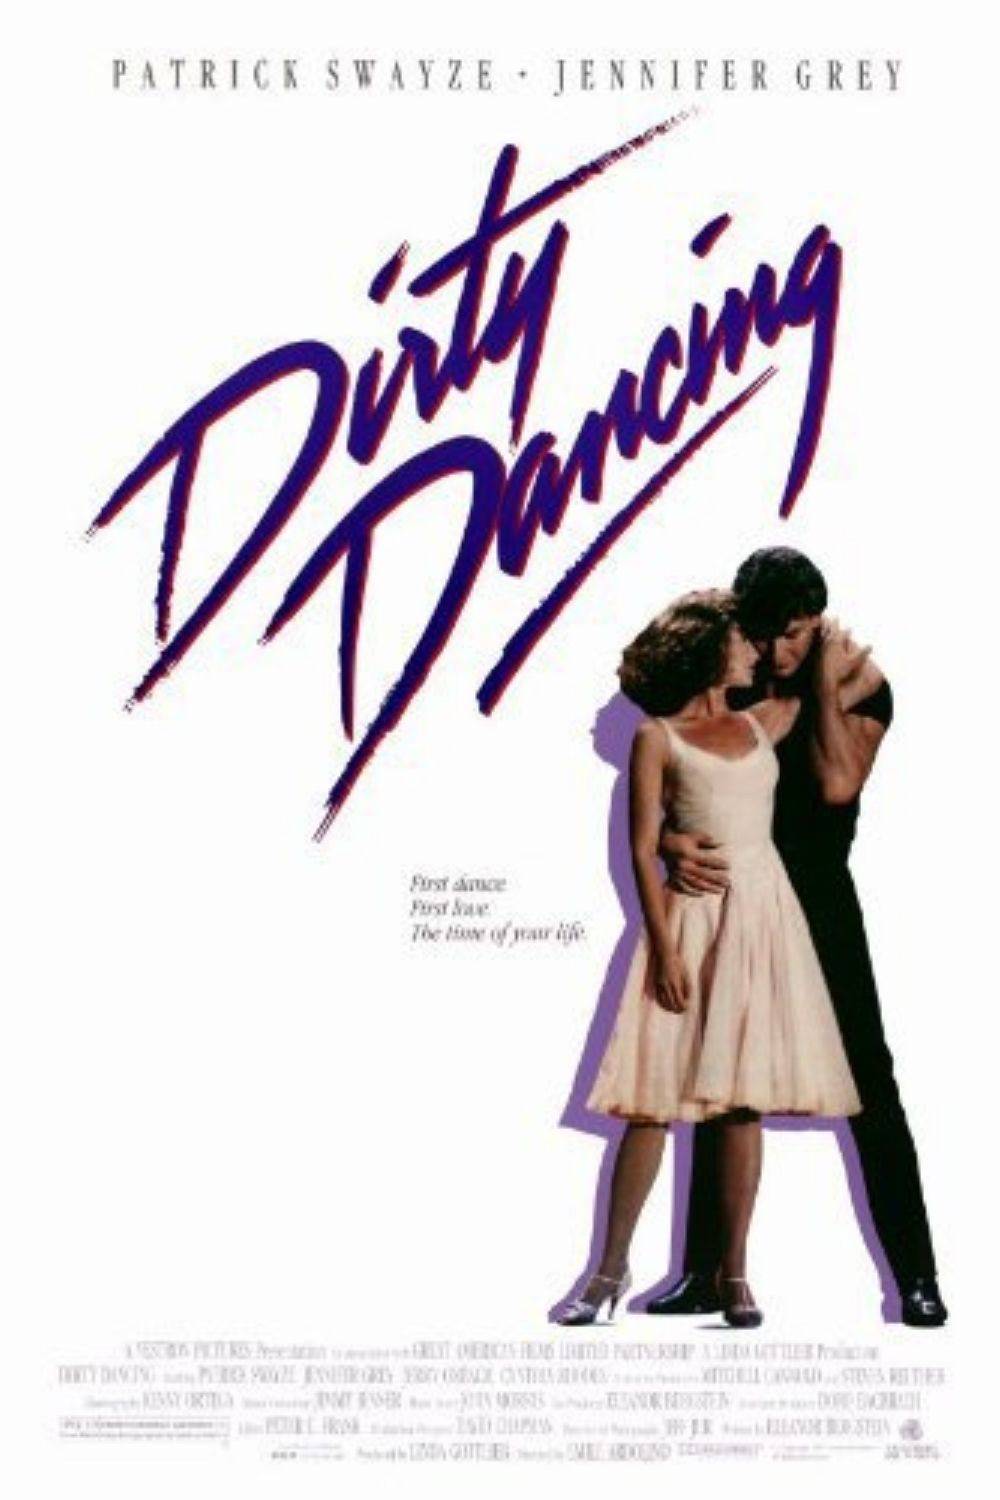 Película de amor clásica - Dirty Dancing  (1987)